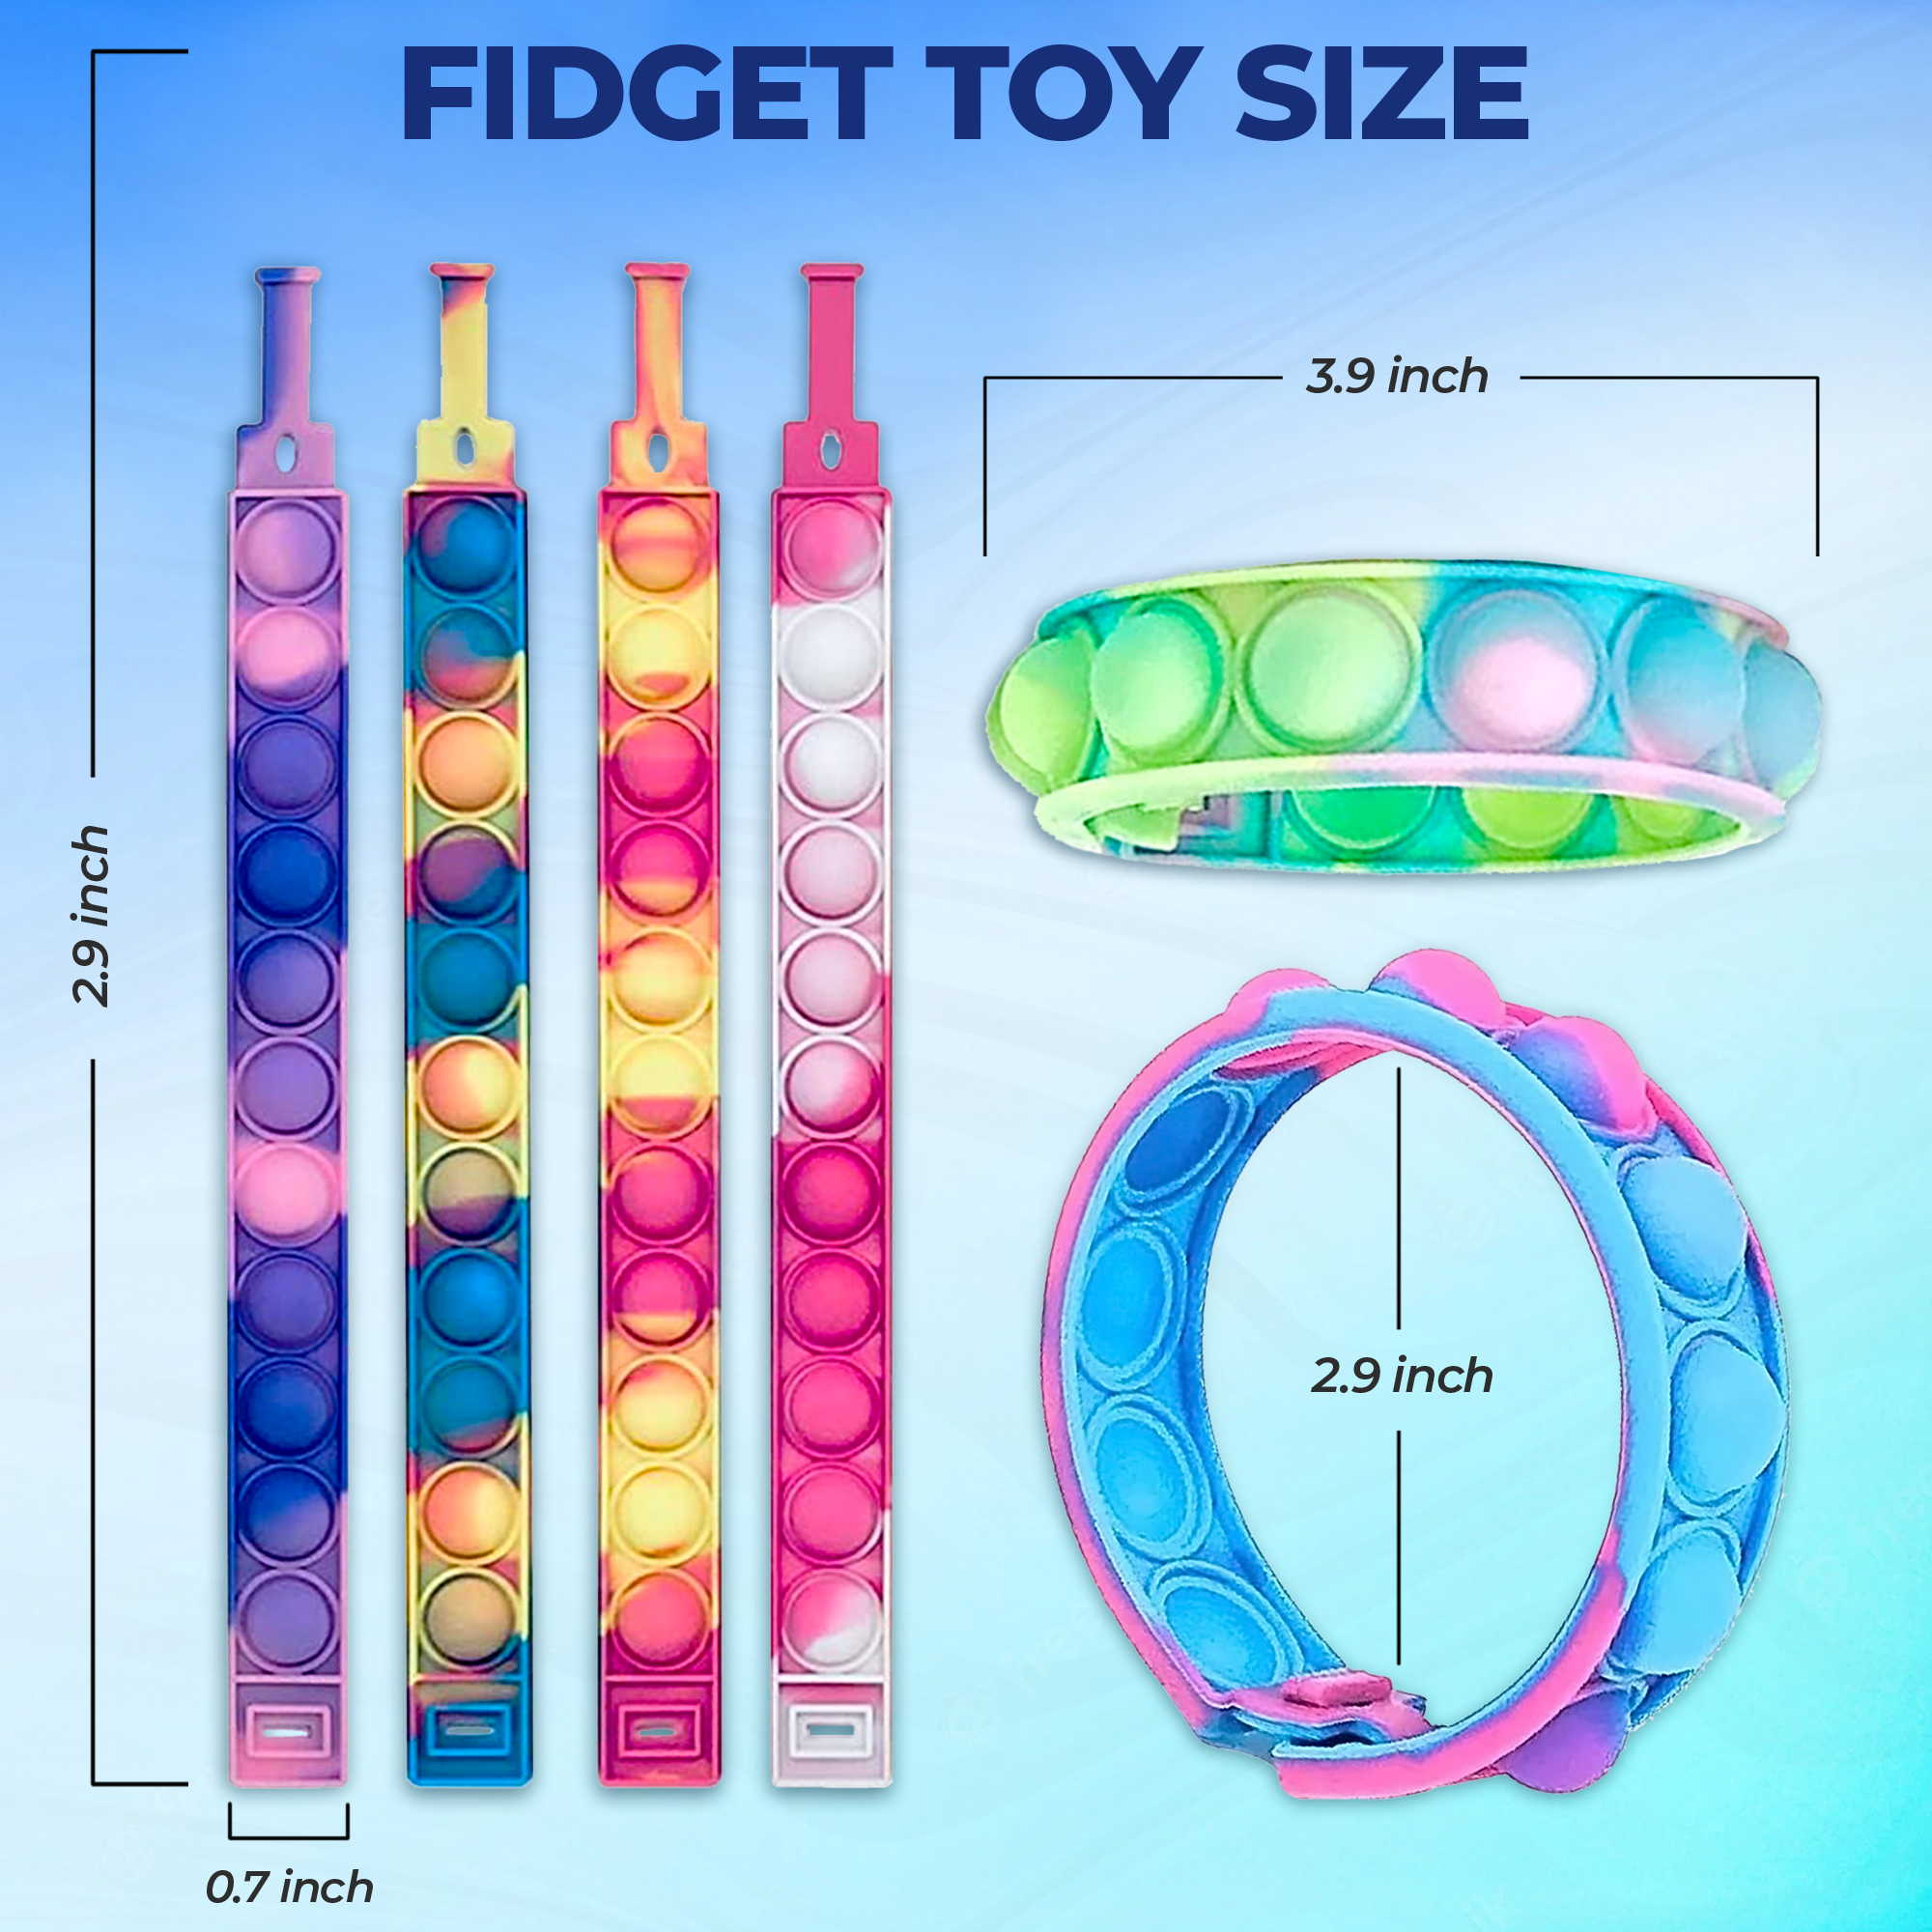 TwCare 8 Pcs Fidget Bracelets Pop It Toy, Glow in The Dark, Rainbow Party Favors Anti-Anxiety Stress Relief Wristband Set, Push Bubbles Sensory Autistic